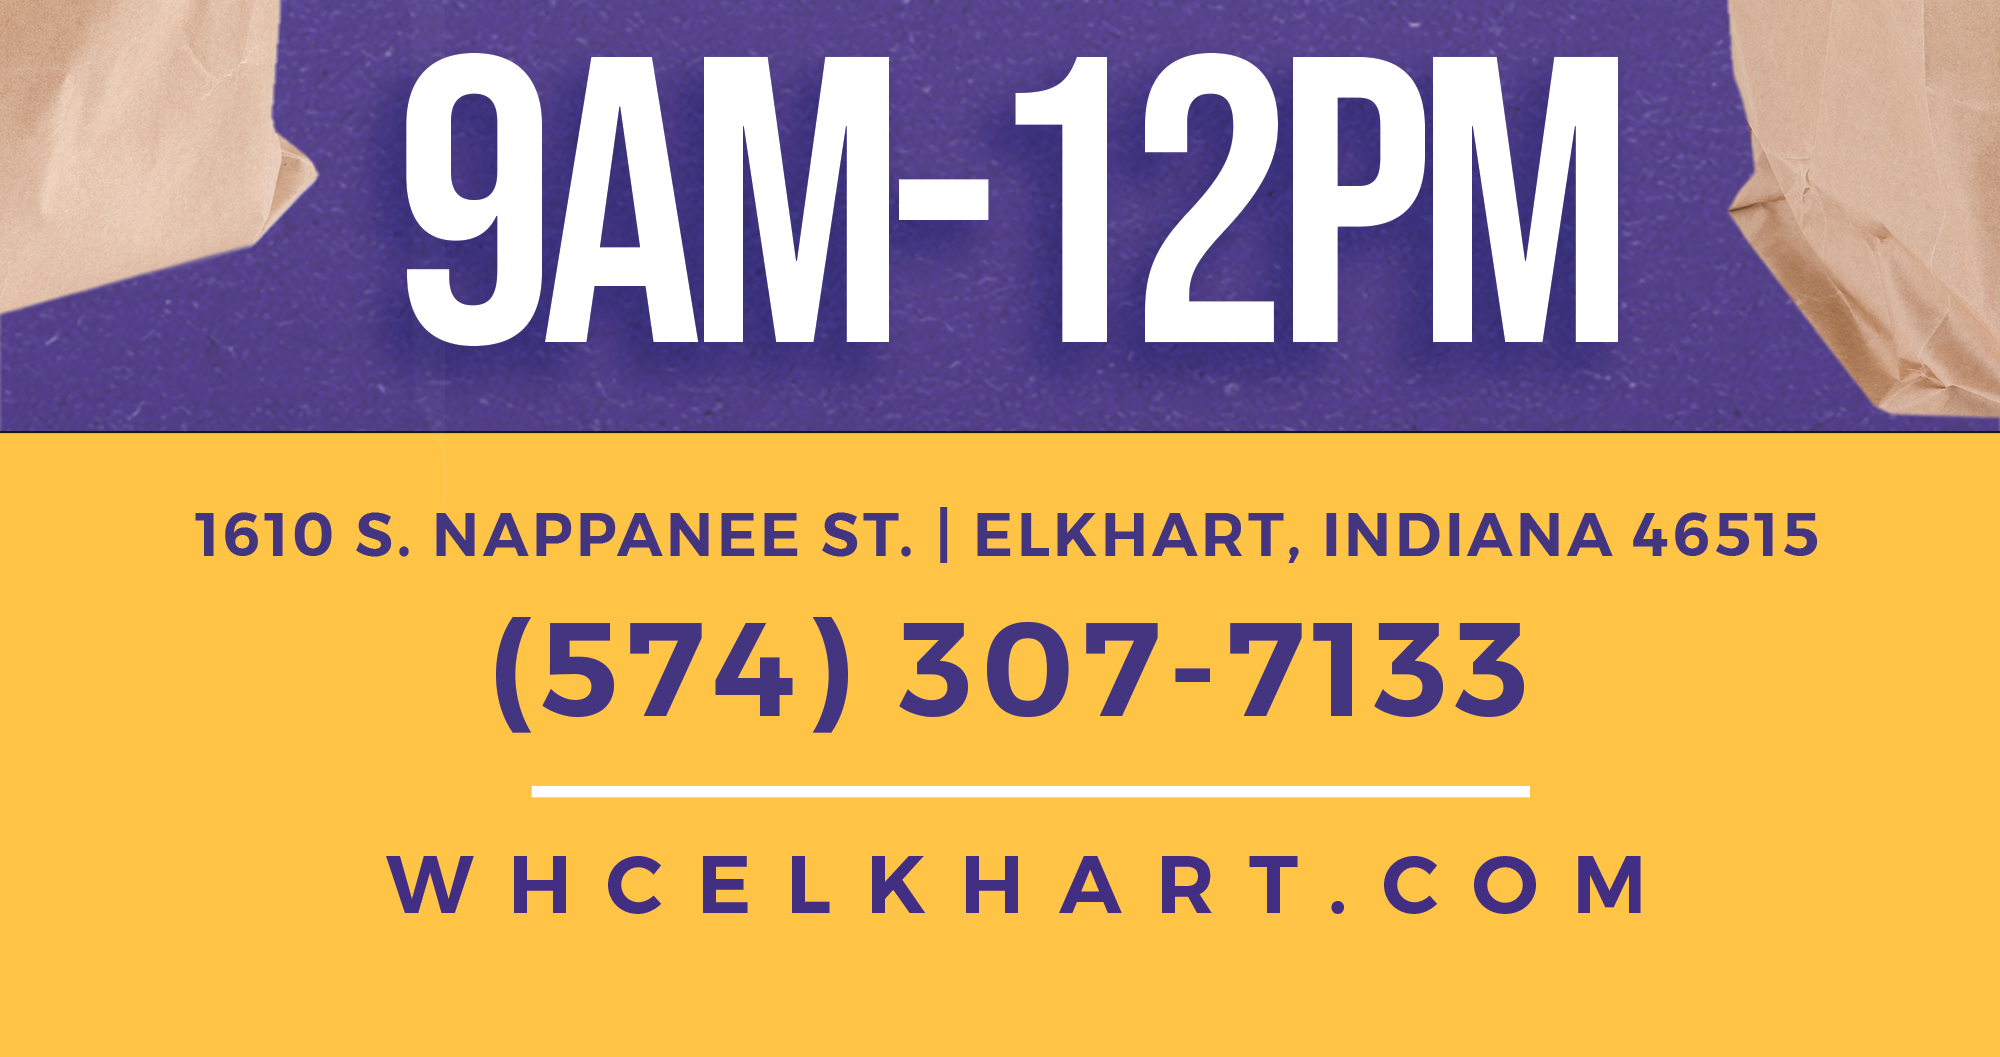 Food Bank Every Tuesday 9am-12pm 1610 S. Nappanee St. Elkhart, Indiana 46515 (574) 307-7133 Whcelkhart.Com